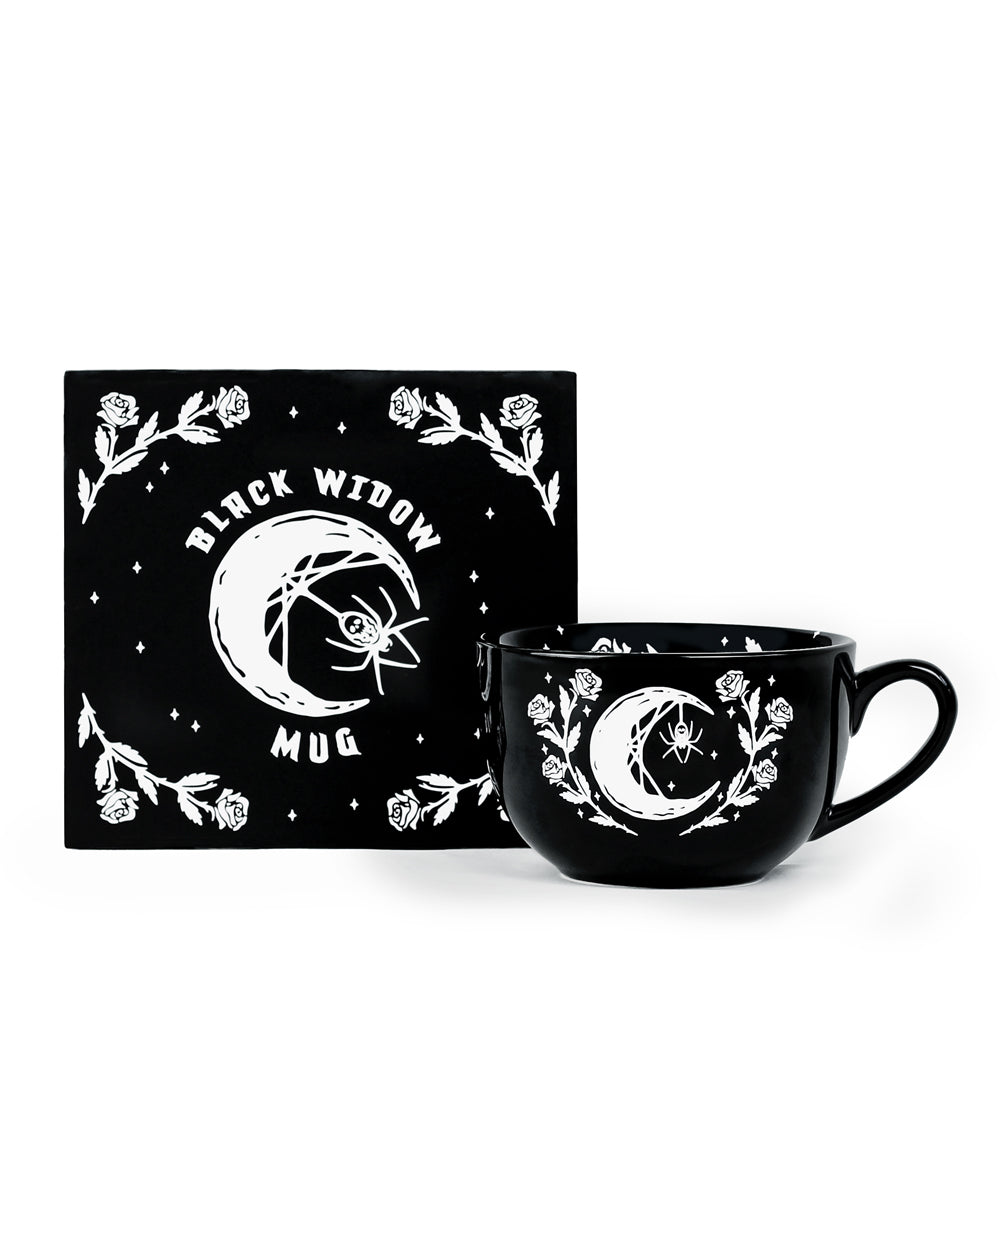 Black Widow Mug